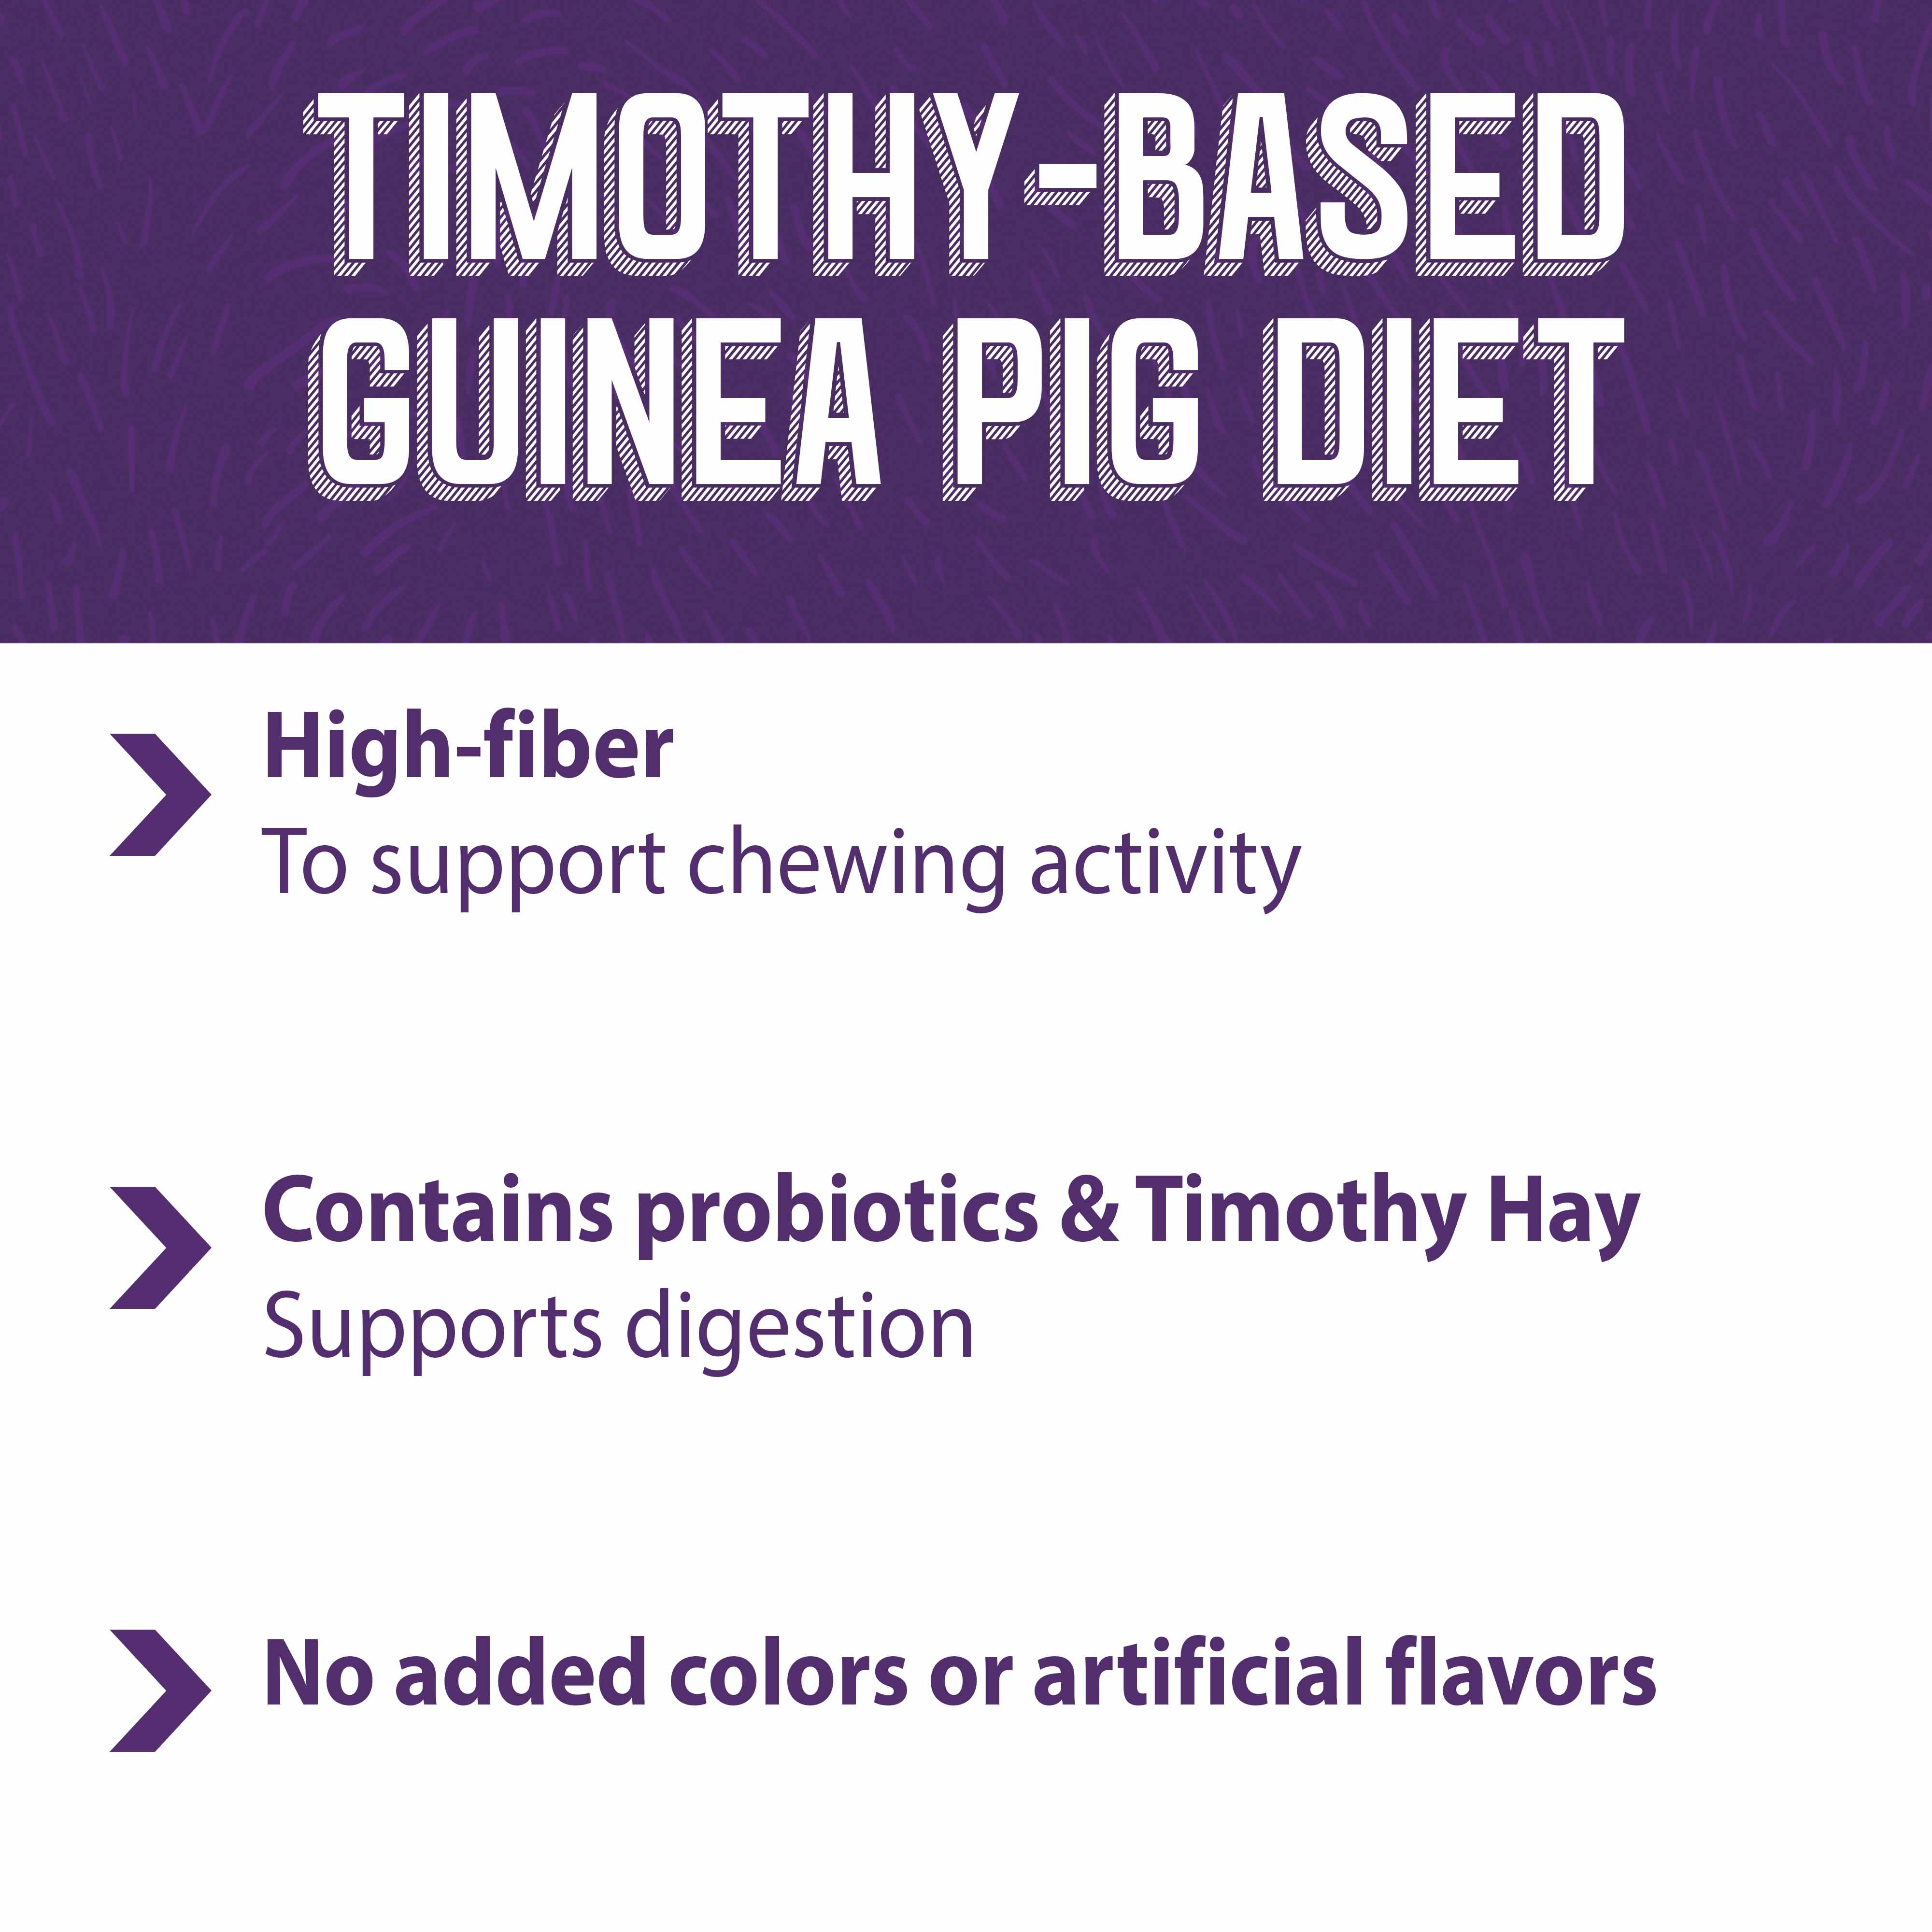 Guinea Pig Diet is high in fiber